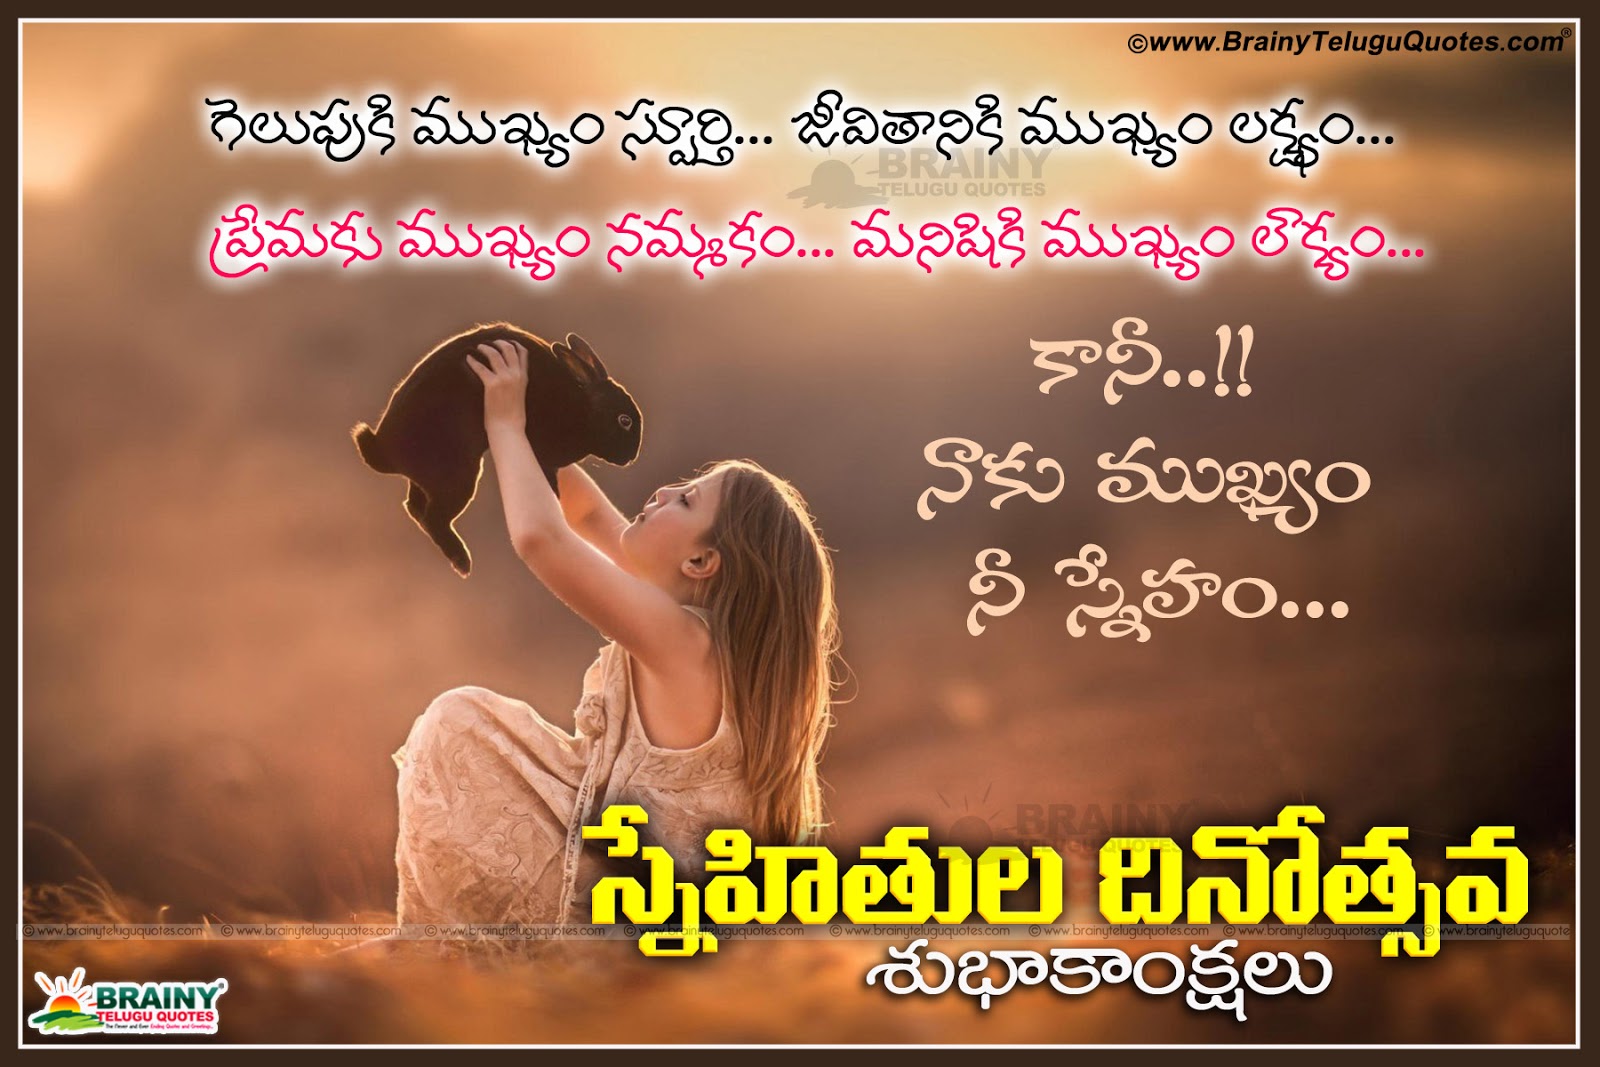 August 4th Happy Friendship Day Telugu Wishes | BrainyTeluguQuotes